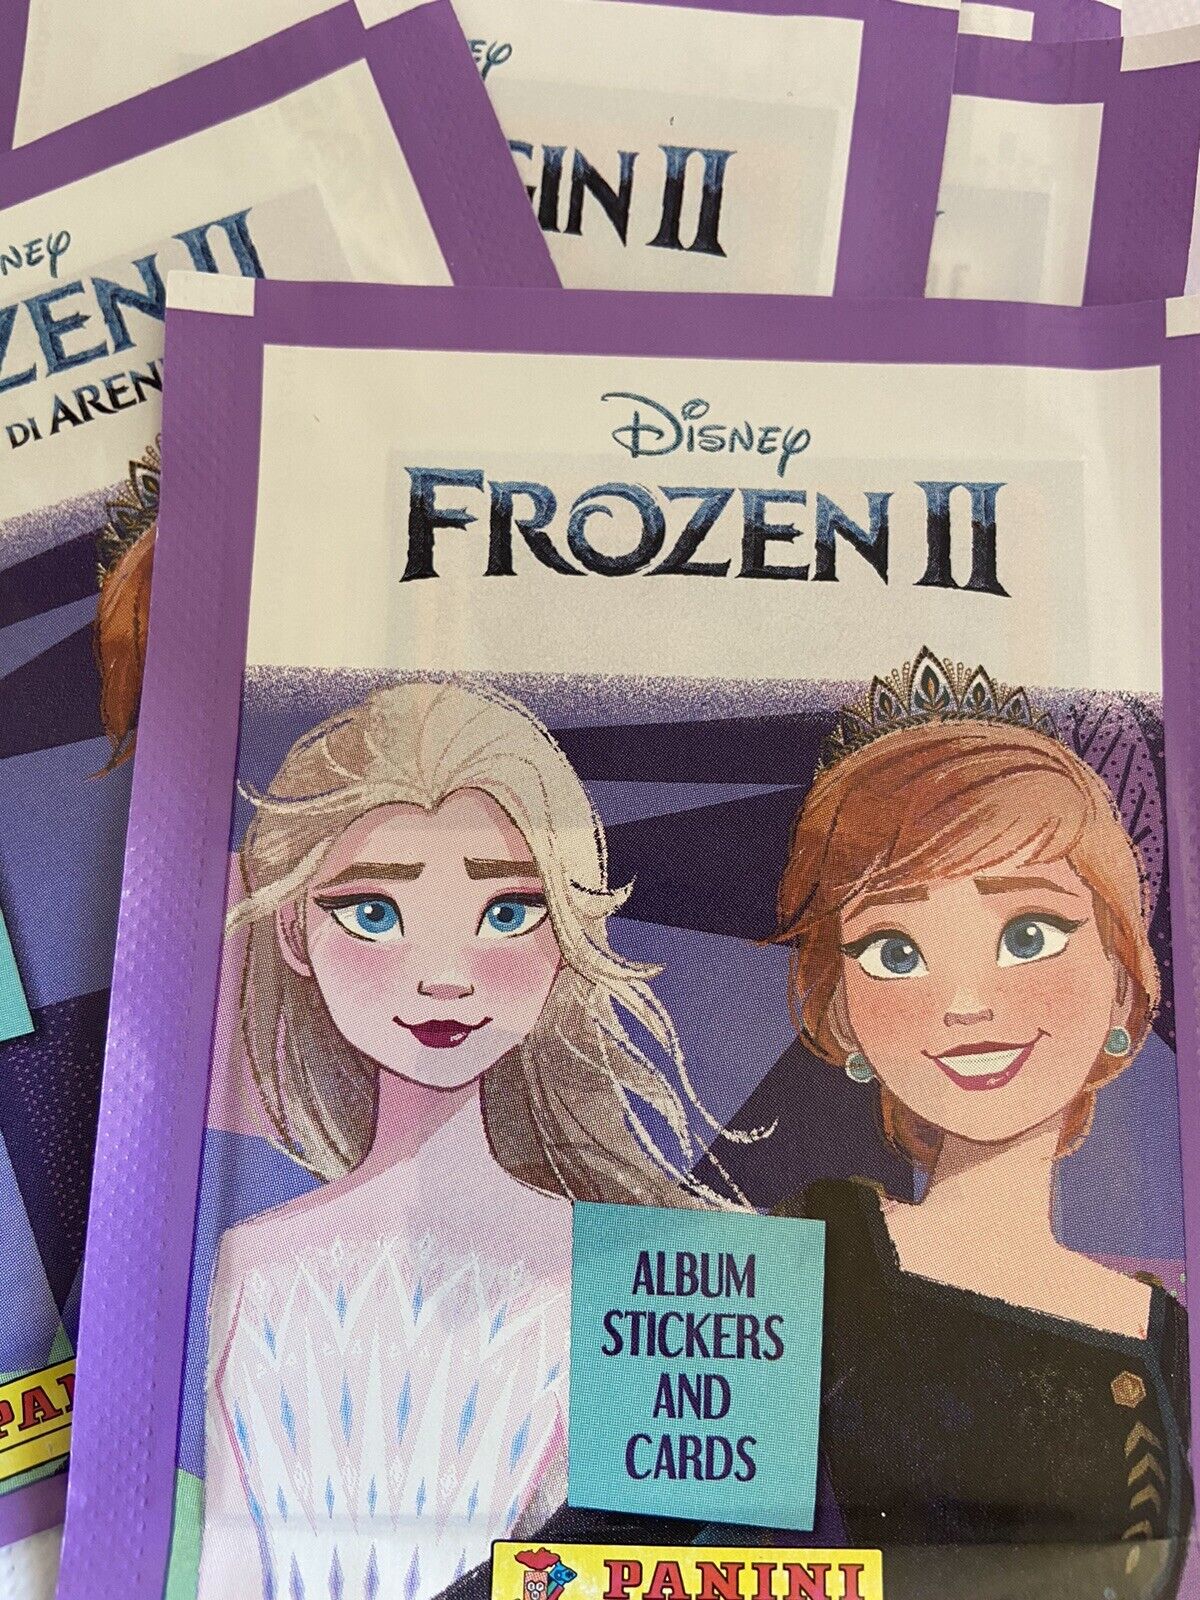 x50 Panini Frozen 2 Sticker Packs “ One Bond Two Paths  + Album +50 Cards Disney